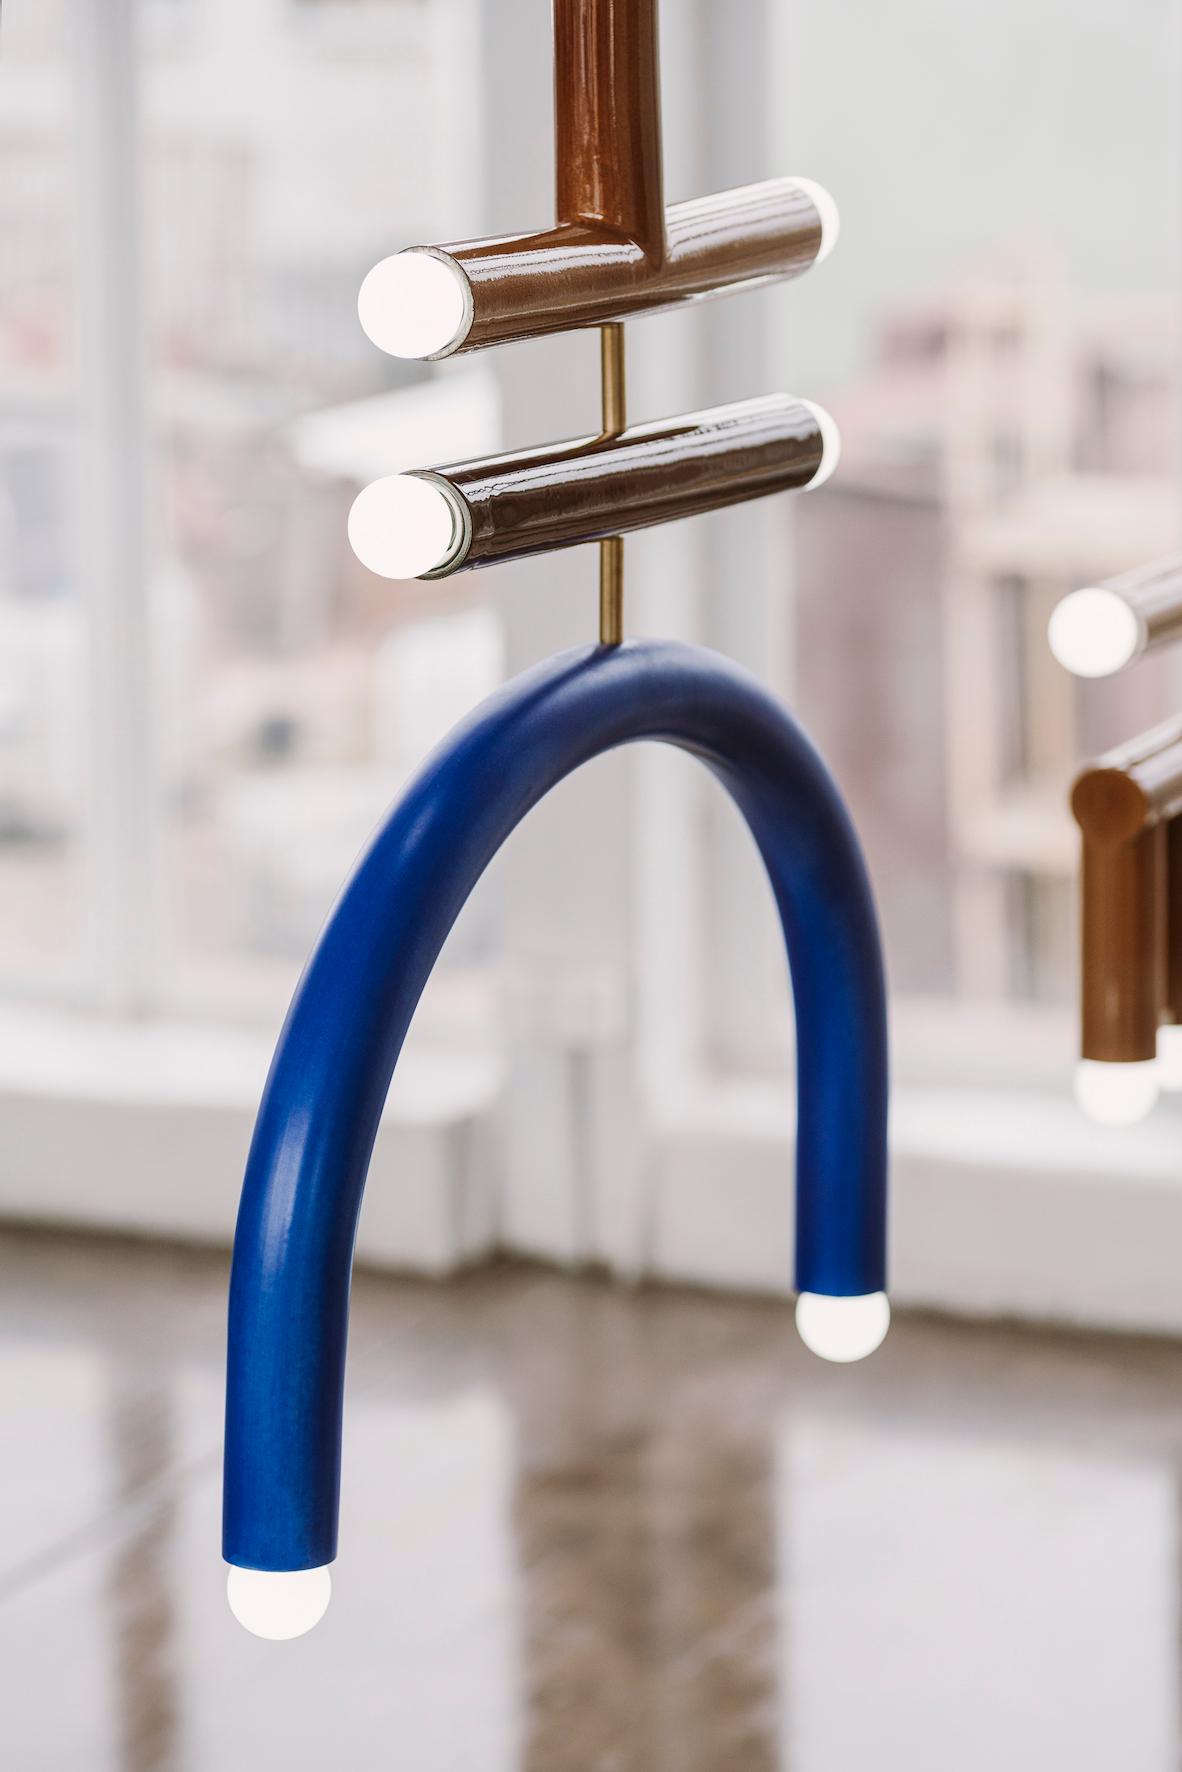 TRN F3 Pendant lamp / ceiling lamp / chandelier 
Designer: Pani Jurek

Model shown: TRN F3, Pink, Cobalt blue, Pistachio, Brass rod
Dimensions: H 48 x 55 x 5 cm
Bulb (not included): E27/E26, compatible with US electric system

- Green -
- Big arc